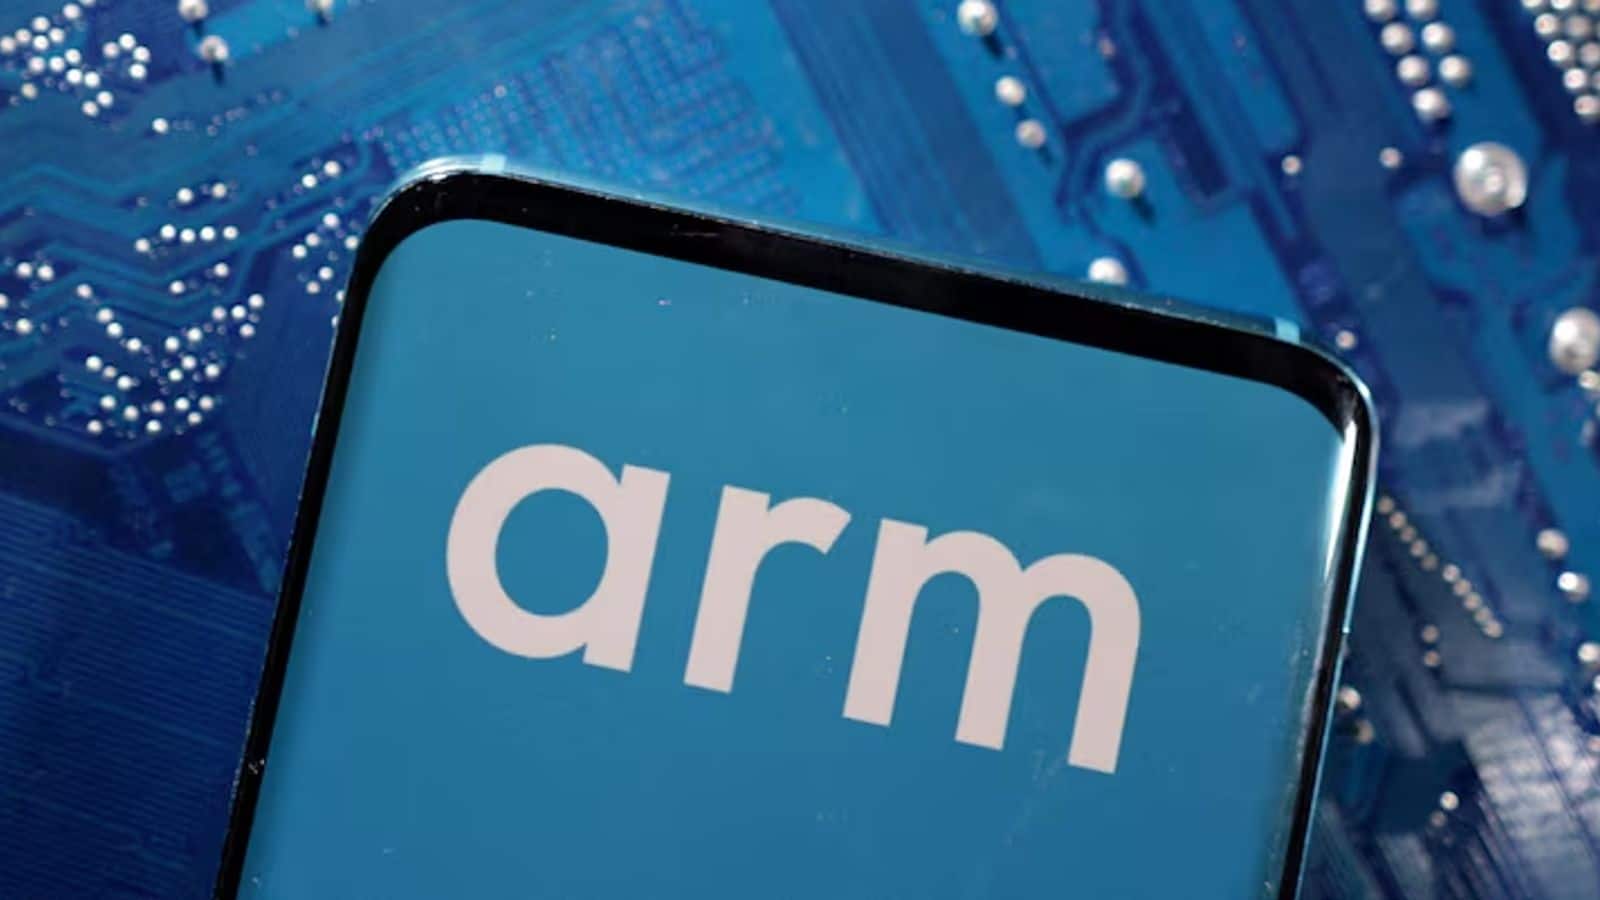 SoftBank's shares surge amid Arm Holdings's AI chip plans